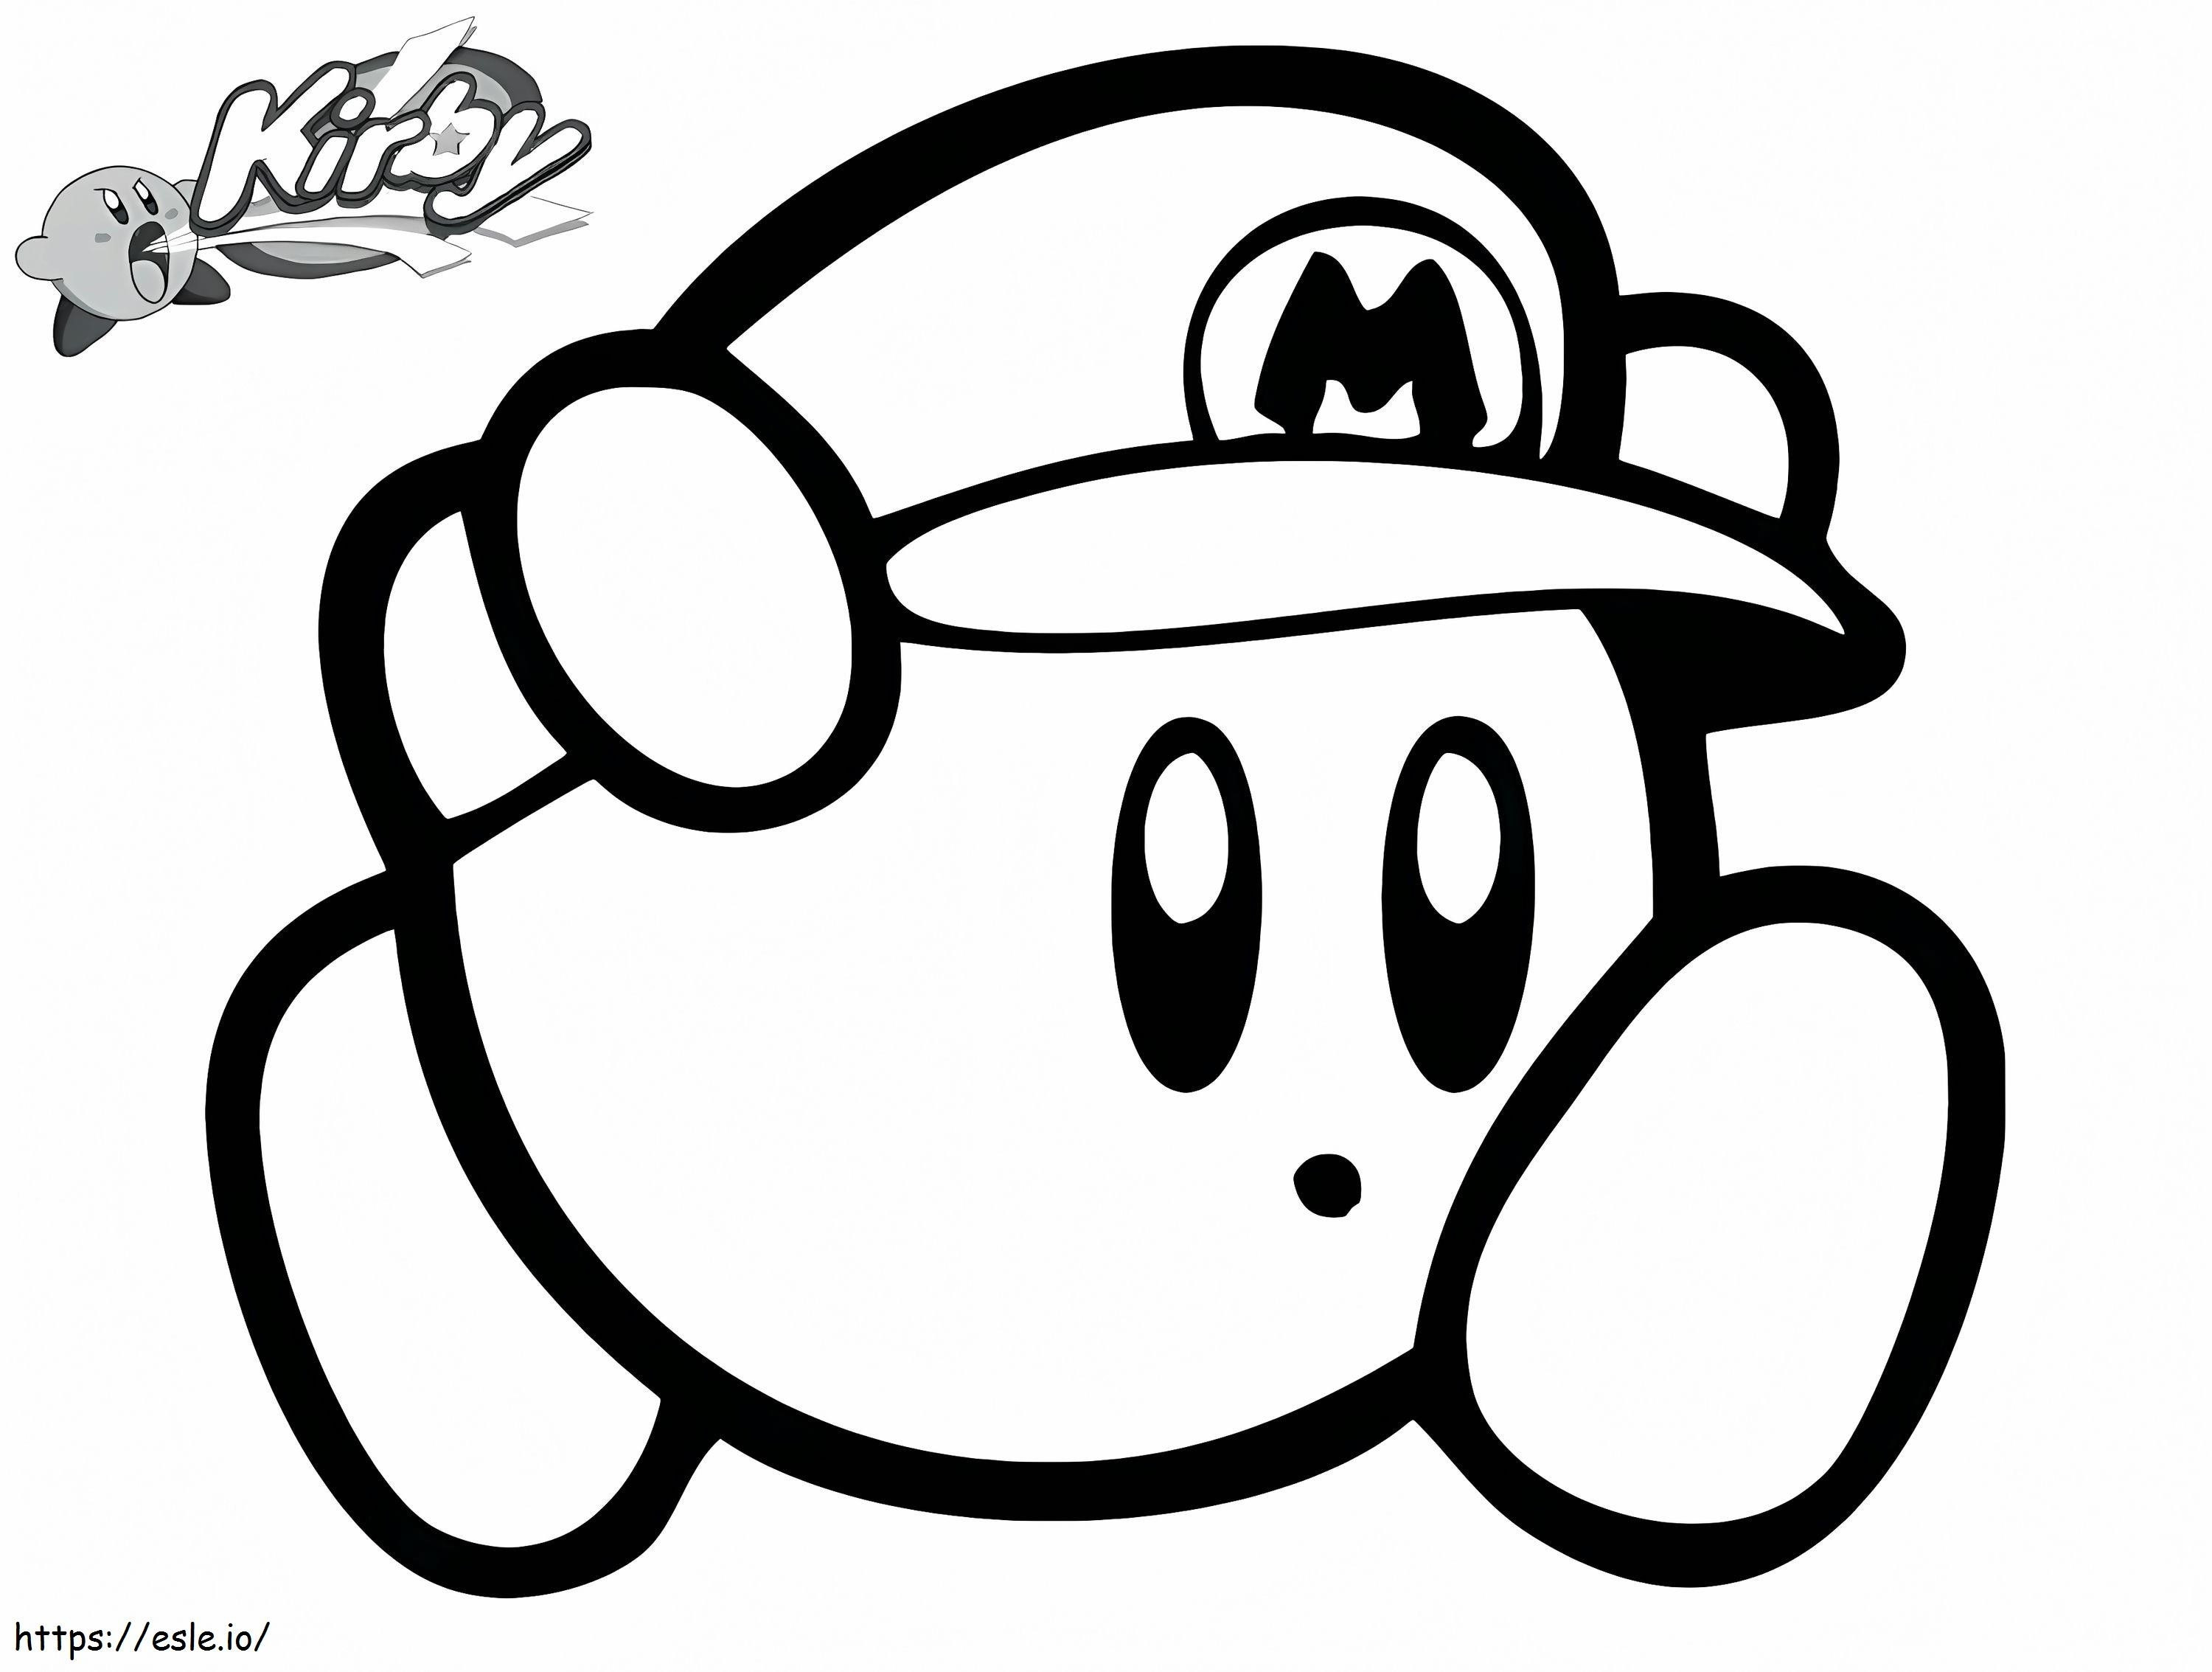 Kirbymarioa4 coloring page